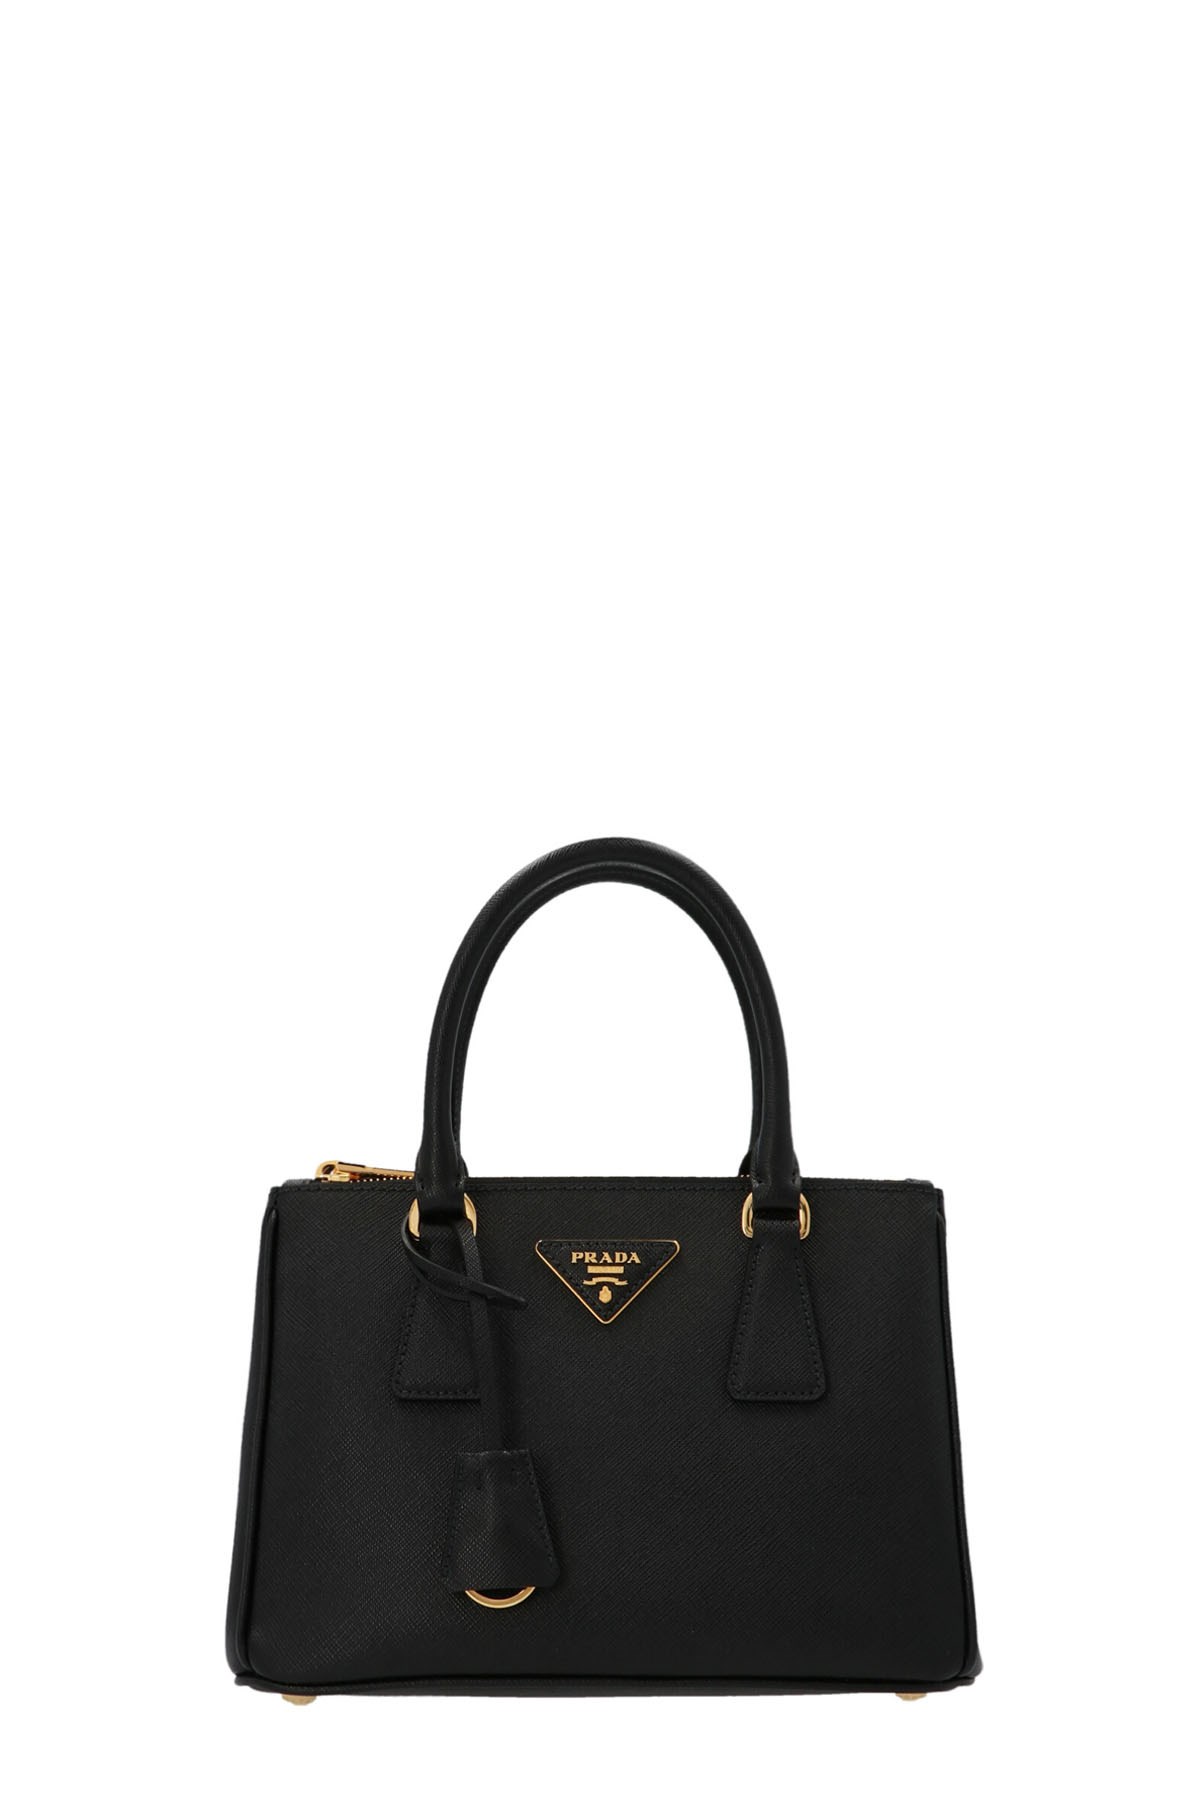 PRADA 'Galleria' Mini Handbag